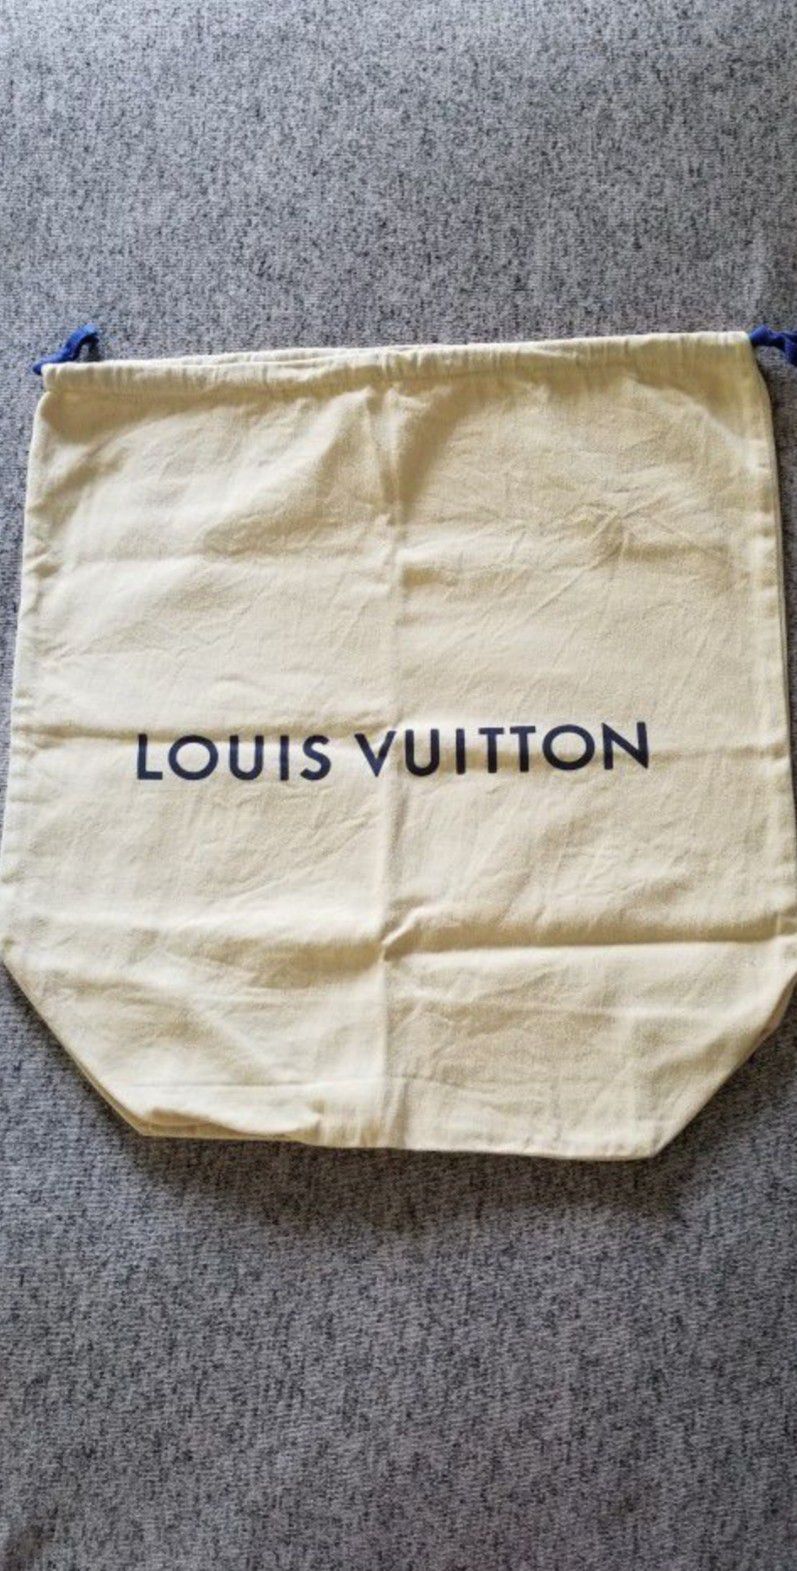 *Louis Vuitton* Tan Dust Bag w/drawstring. 